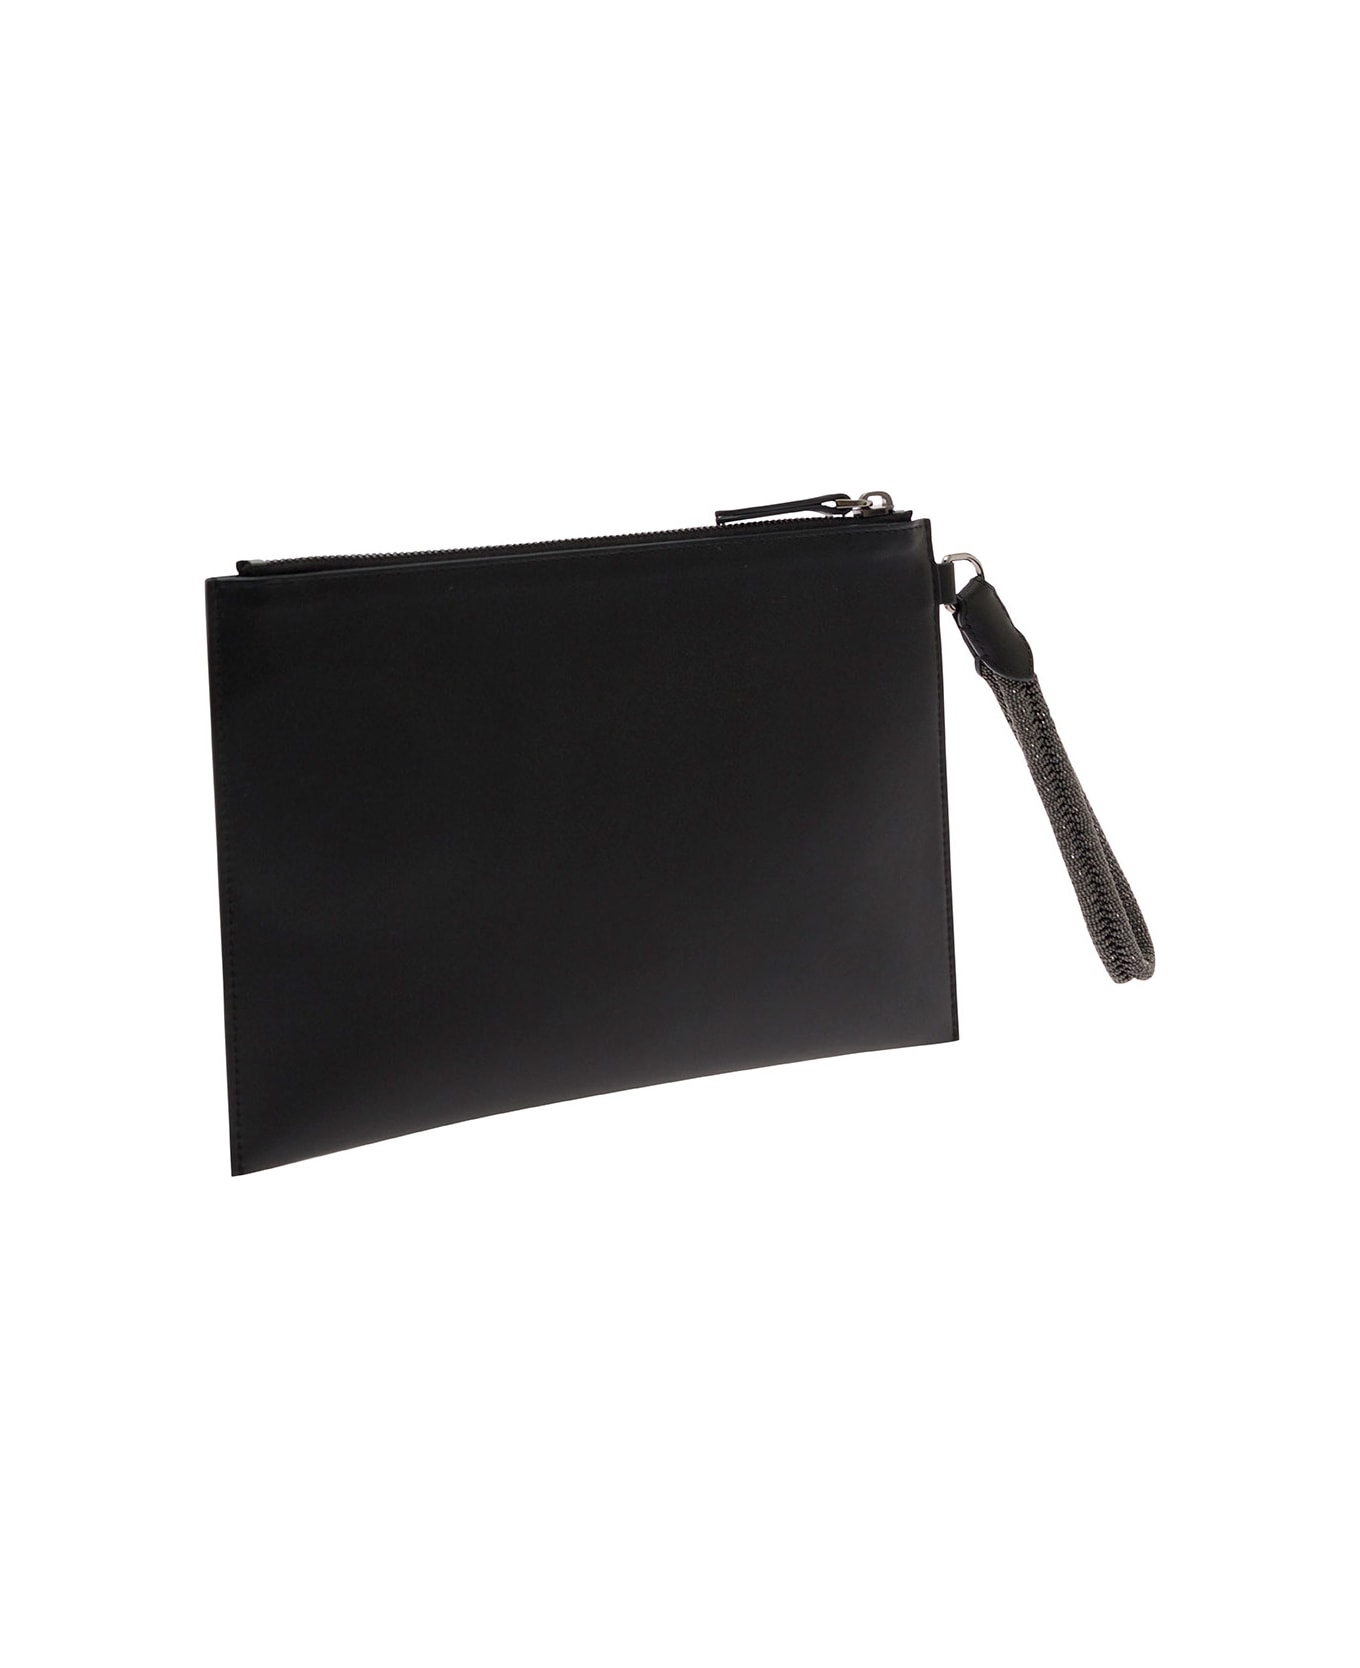 Brunello Cucinelli Black Clutch With Monile Wrist Strap In Leather Woman - Black